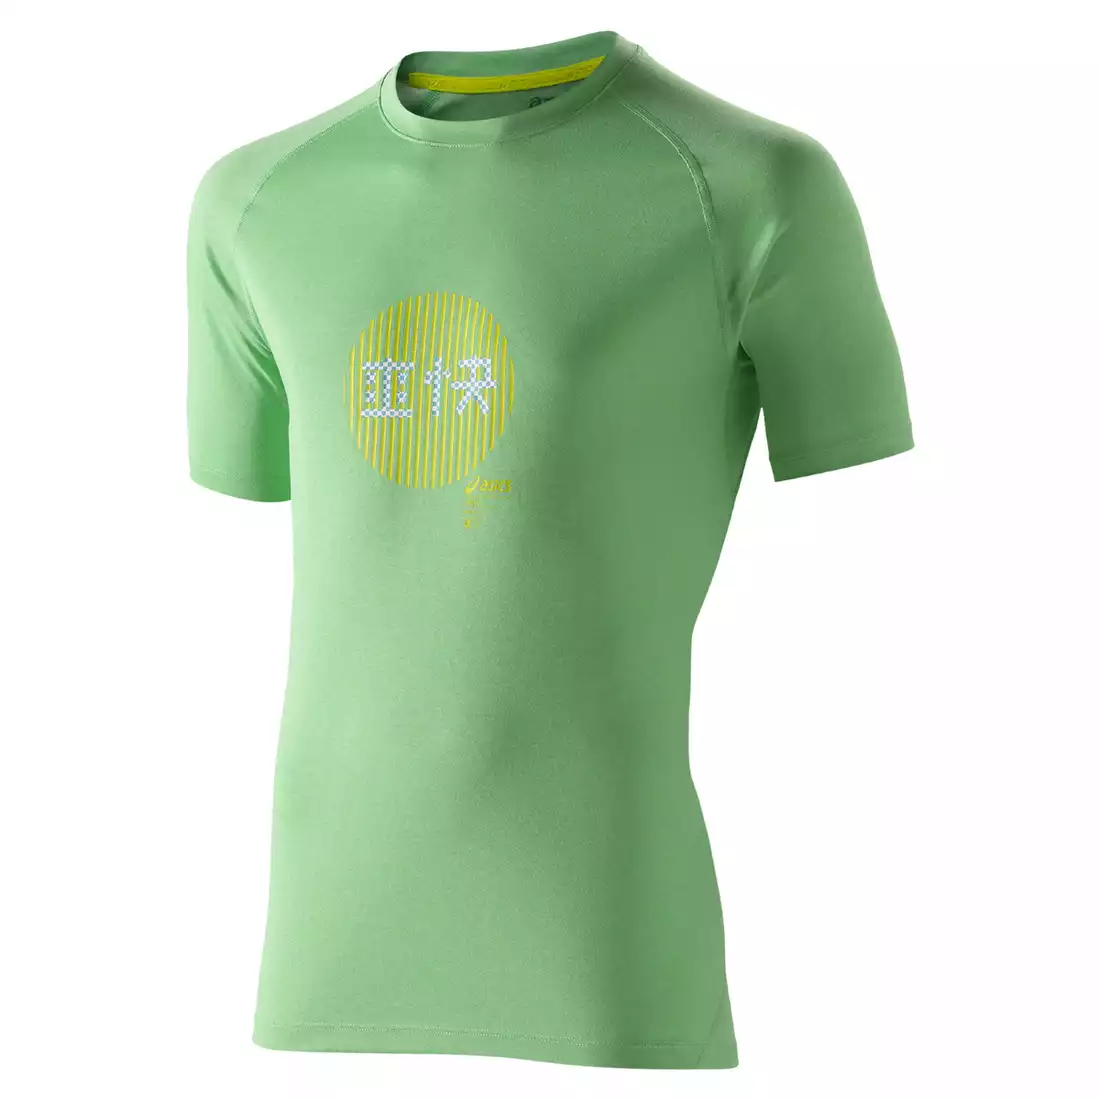 ASICS 110519-0489 SOUKAI GRAPHIC TOP - męska koszulka do biegania, kolor: Zielony